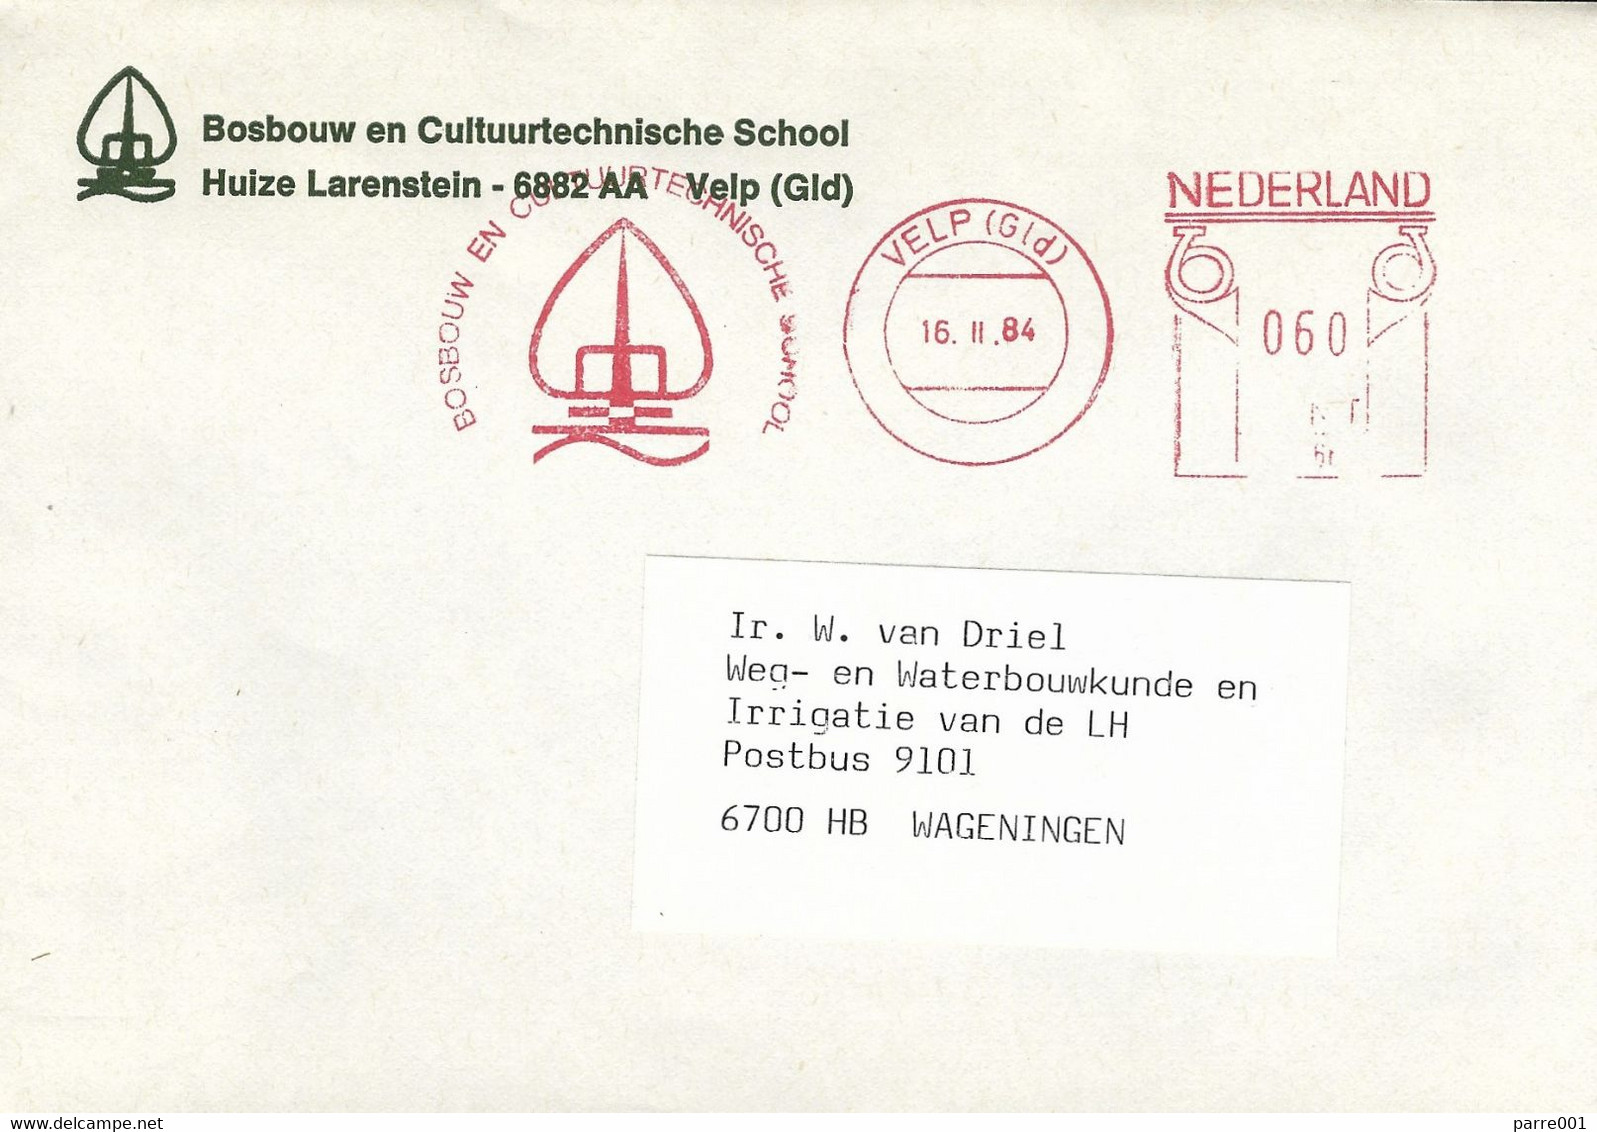 Nederland Netherlands 1984 Velp Meter Postalia “P” PR4665 Forestry School EMA Cover - Frankeermachines (EMA)